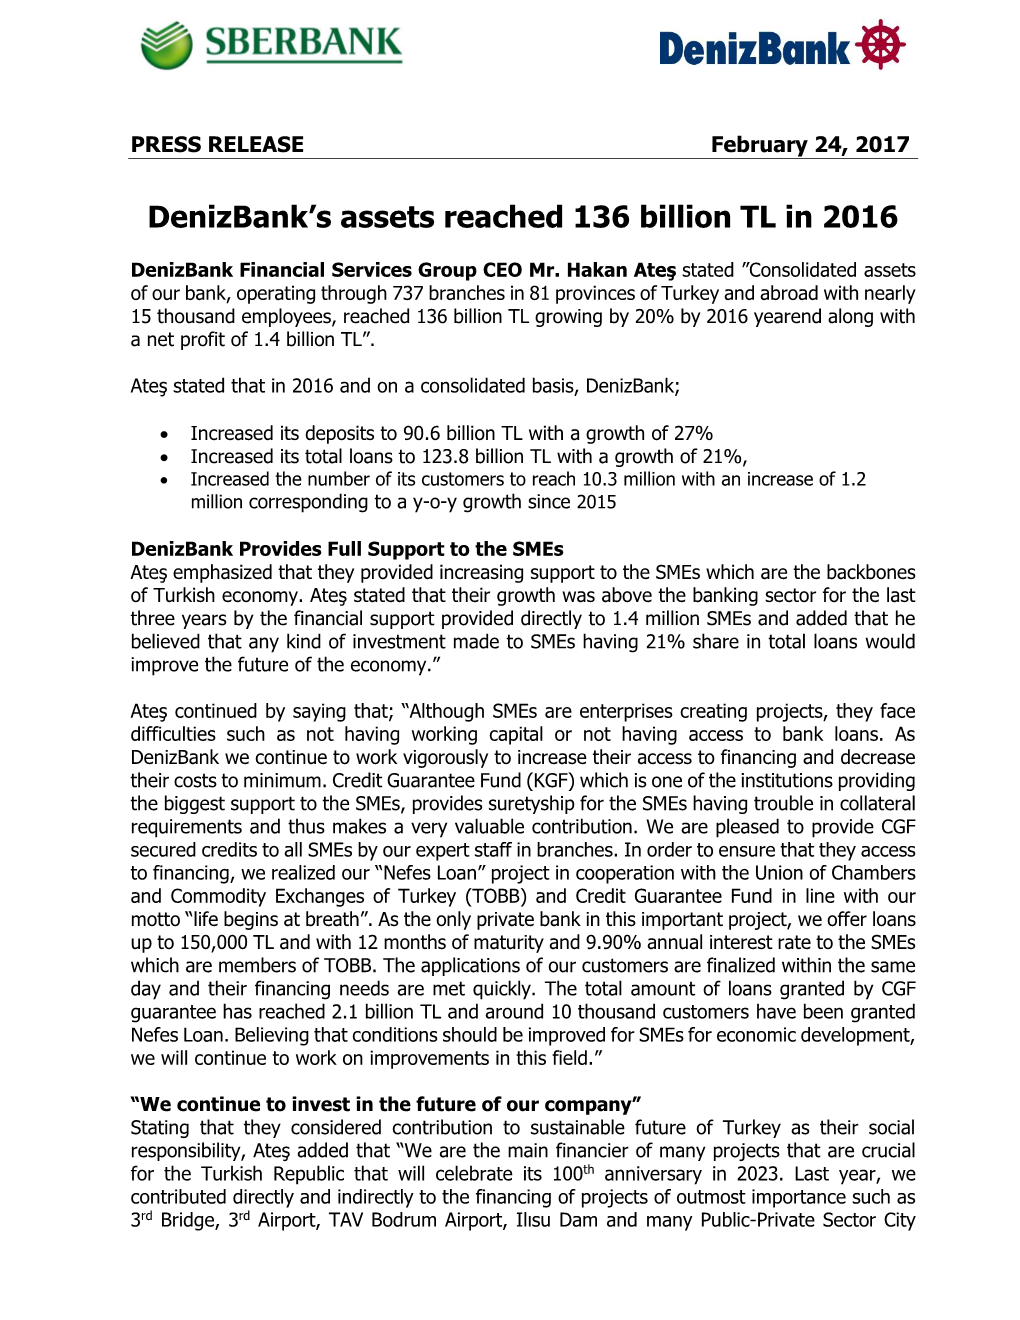 Denizbank's Assets Reached 136 Billion TL in 2016